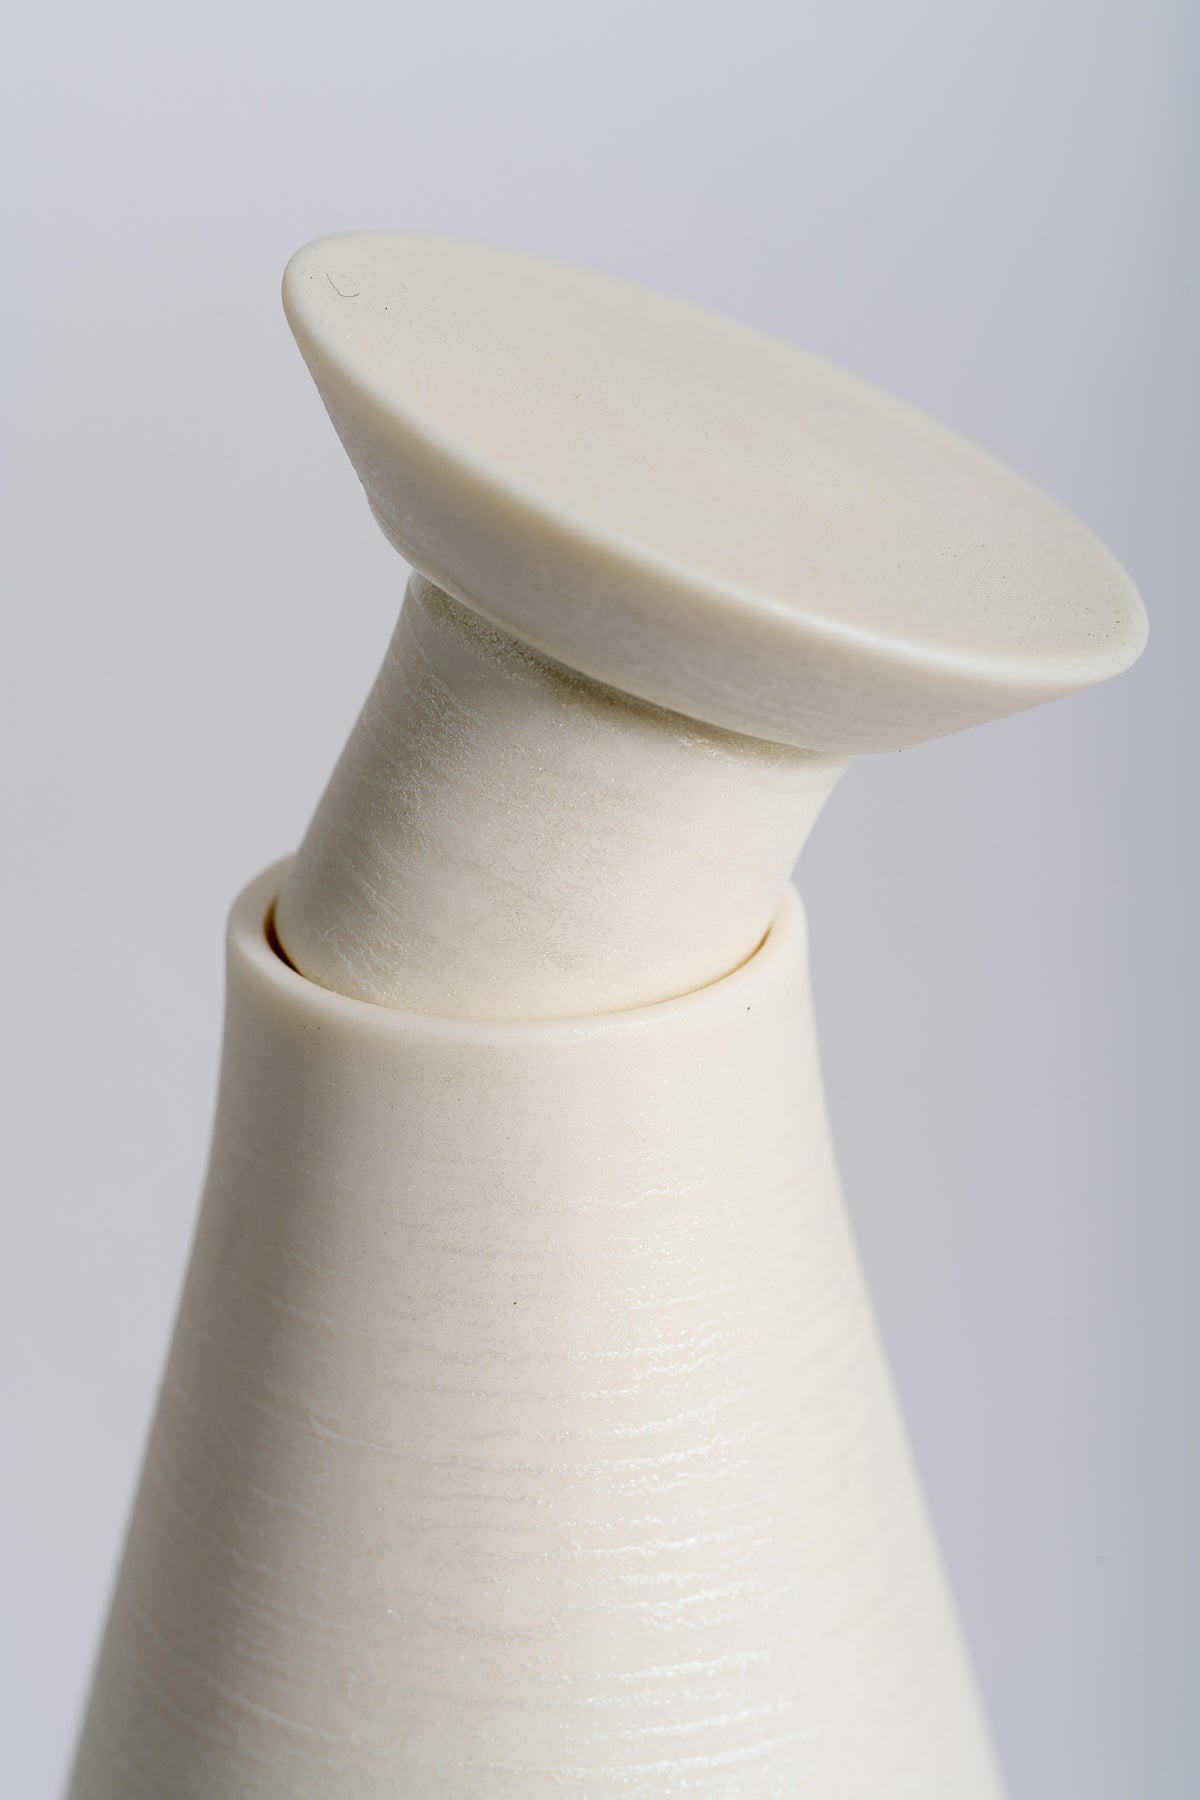 SHHH Exclusive Limited Edition Ceramic Bottles by Katuhisa Kitano